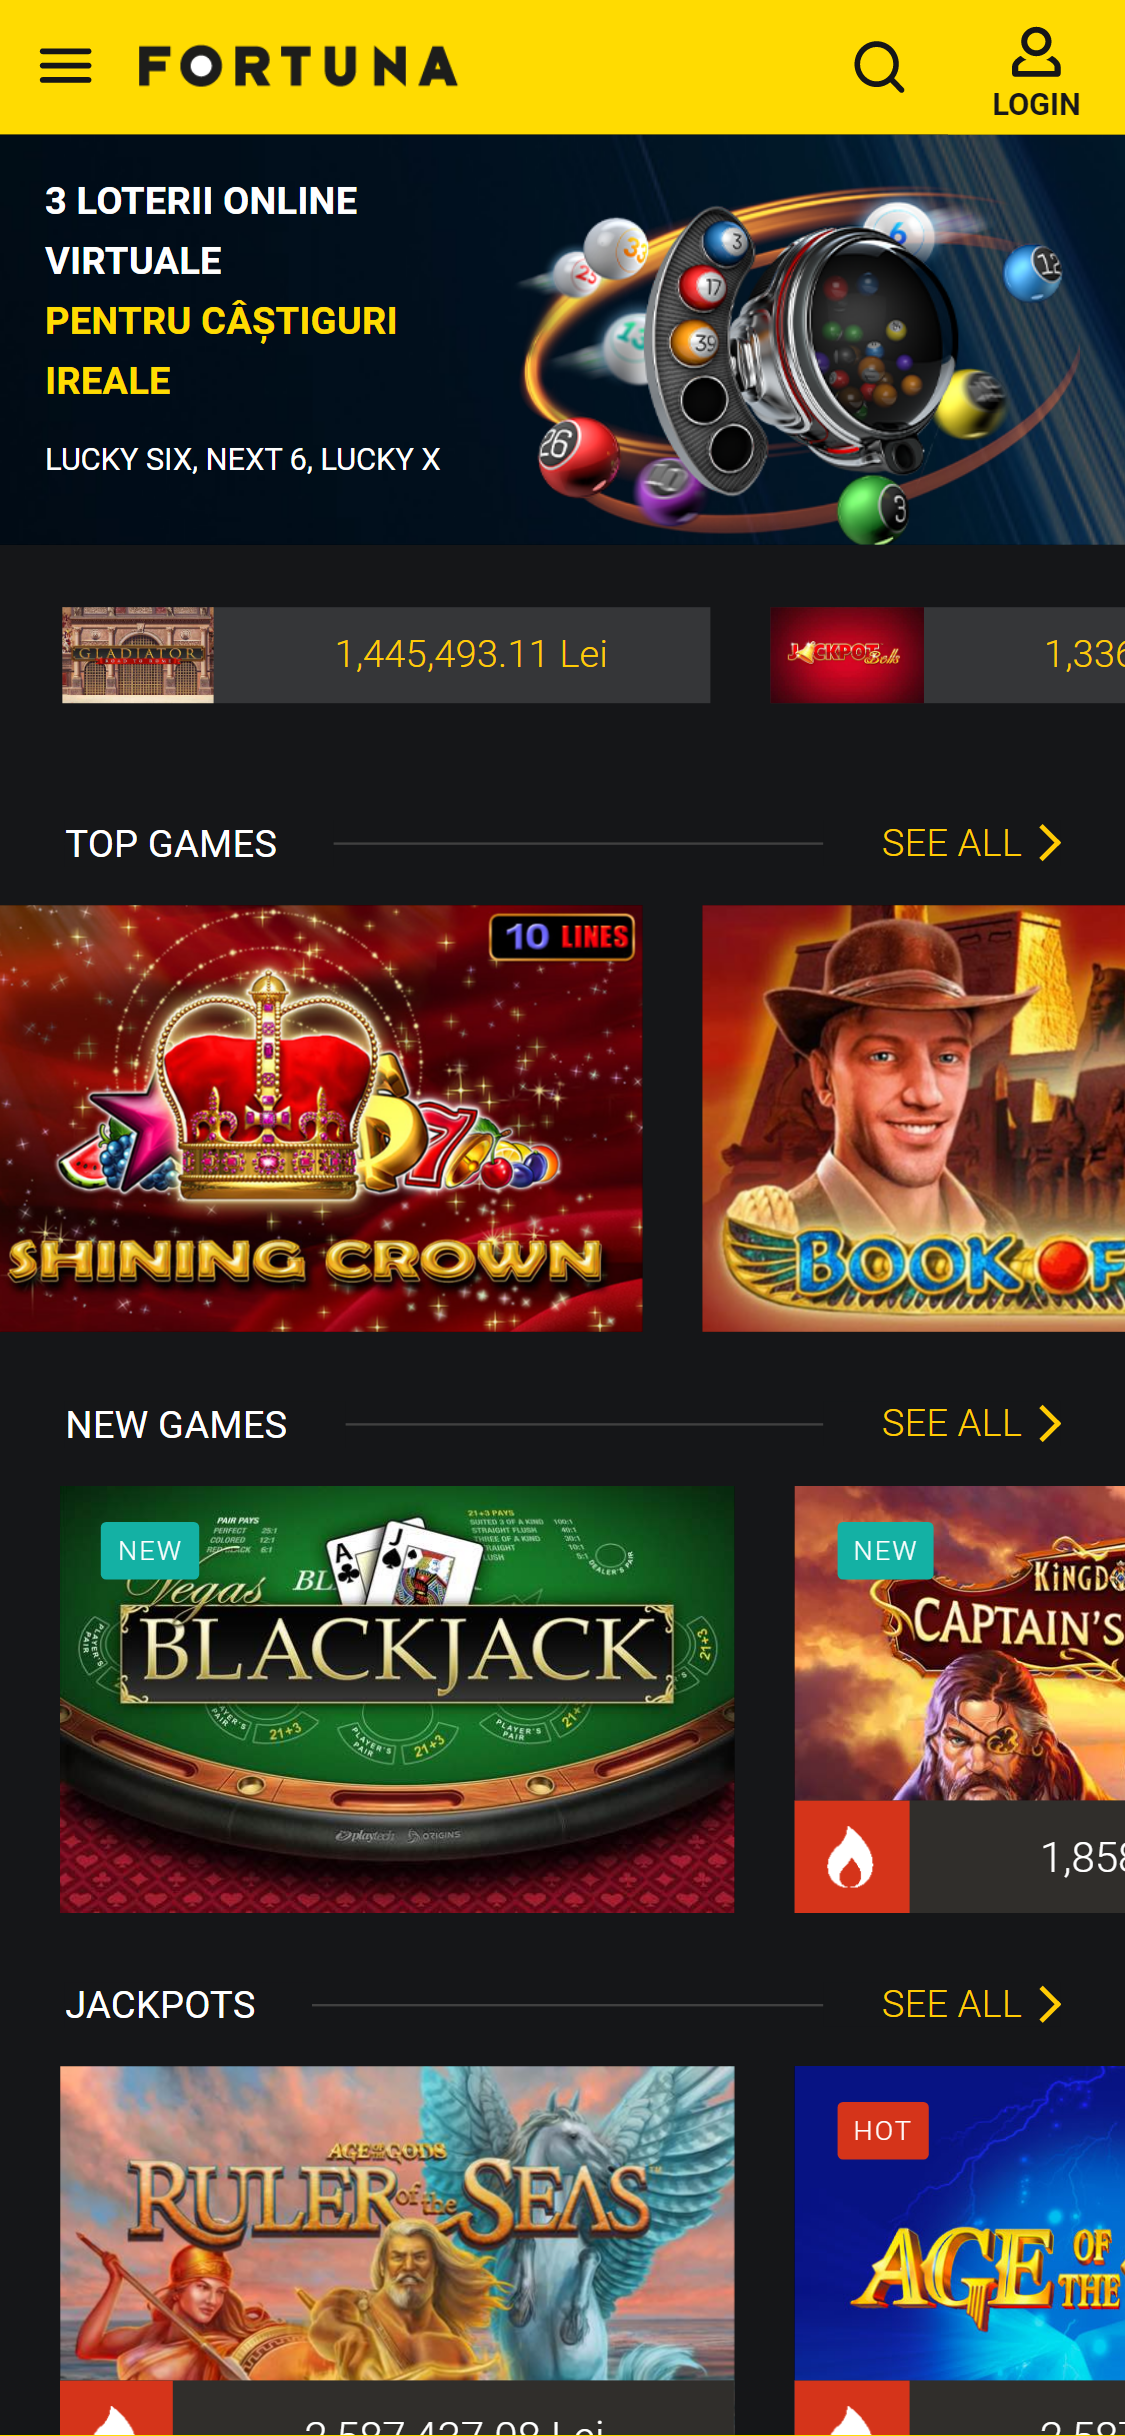 eFortuna Casino Mobile Games Review